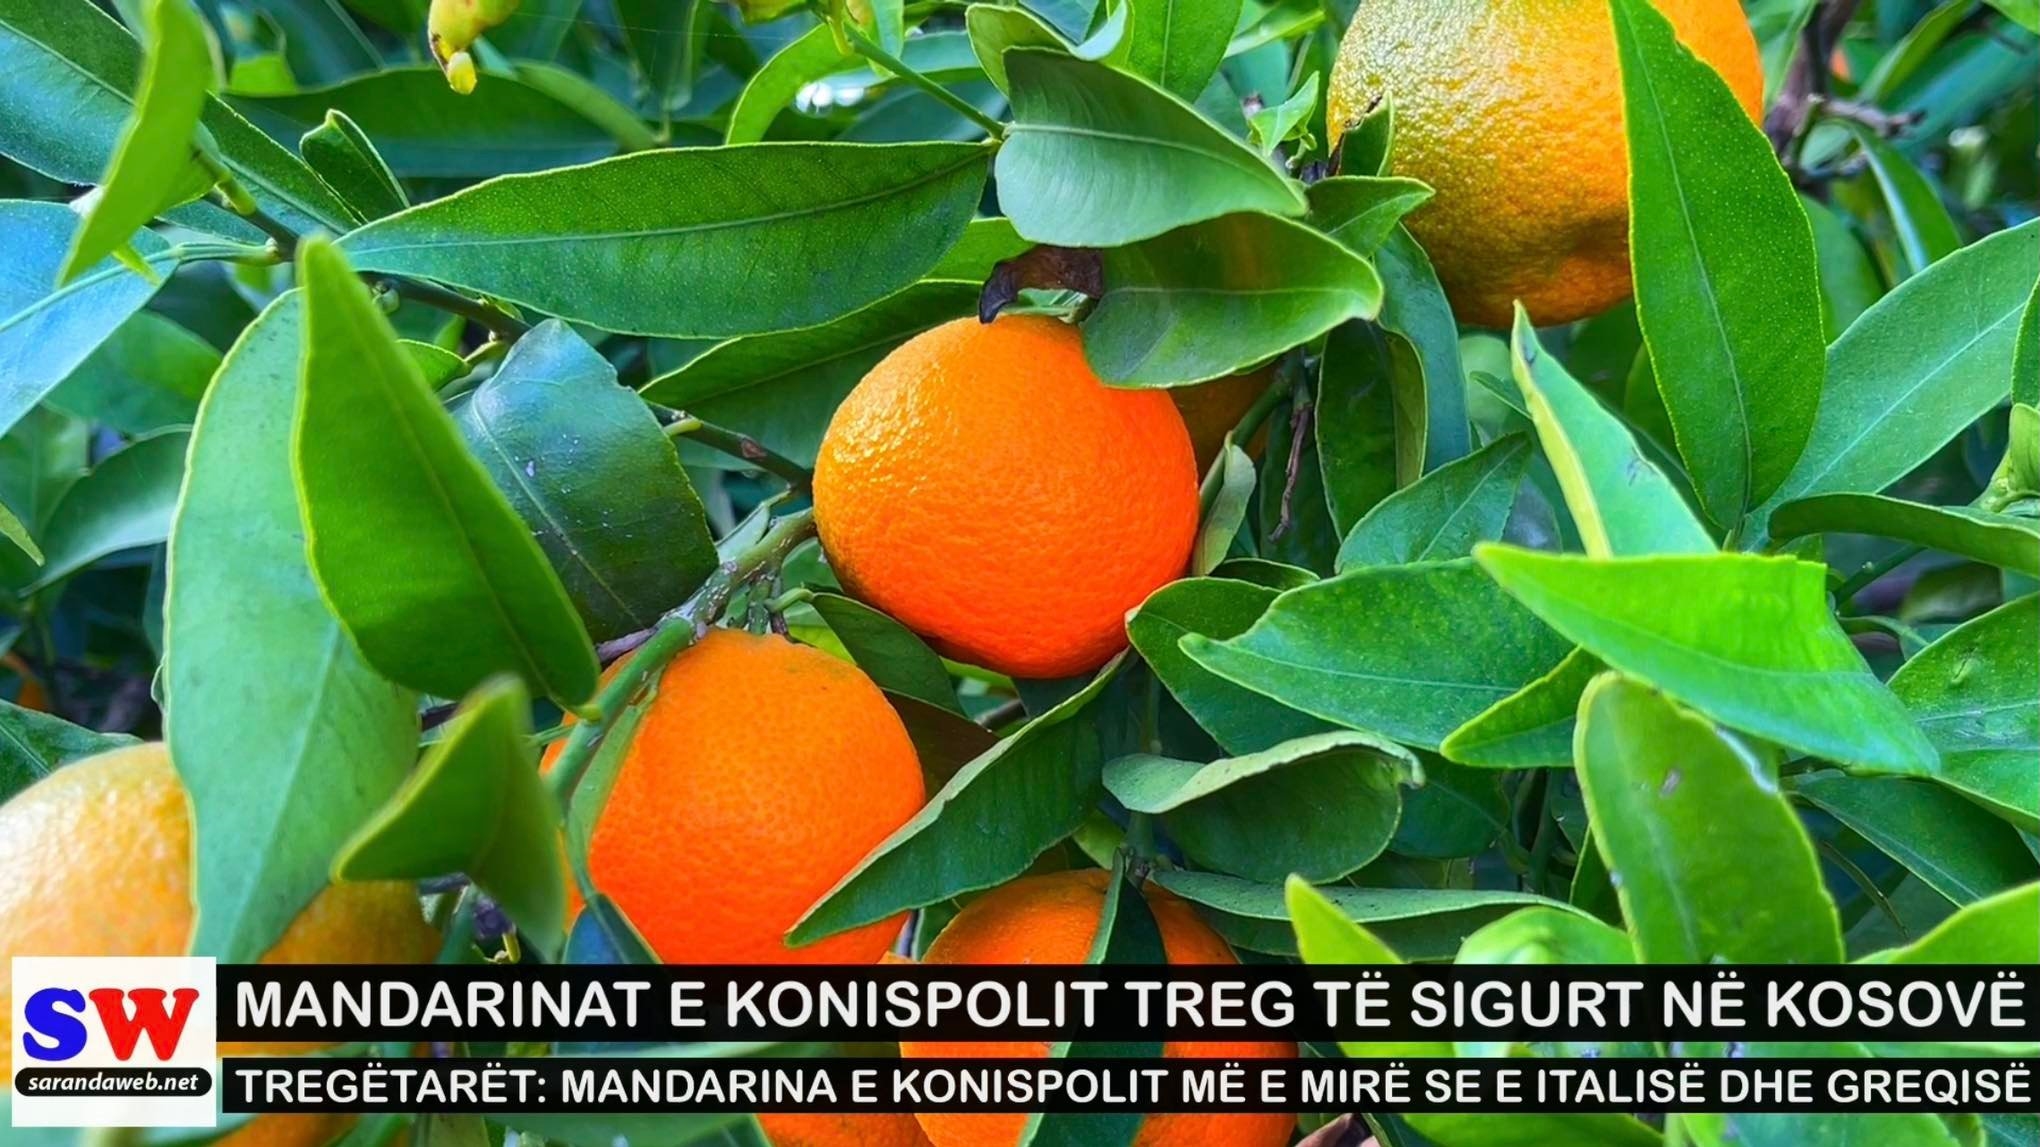 Mandarina e Konispolit po konkurron shtetet fqinje si Italia dhe Greqia